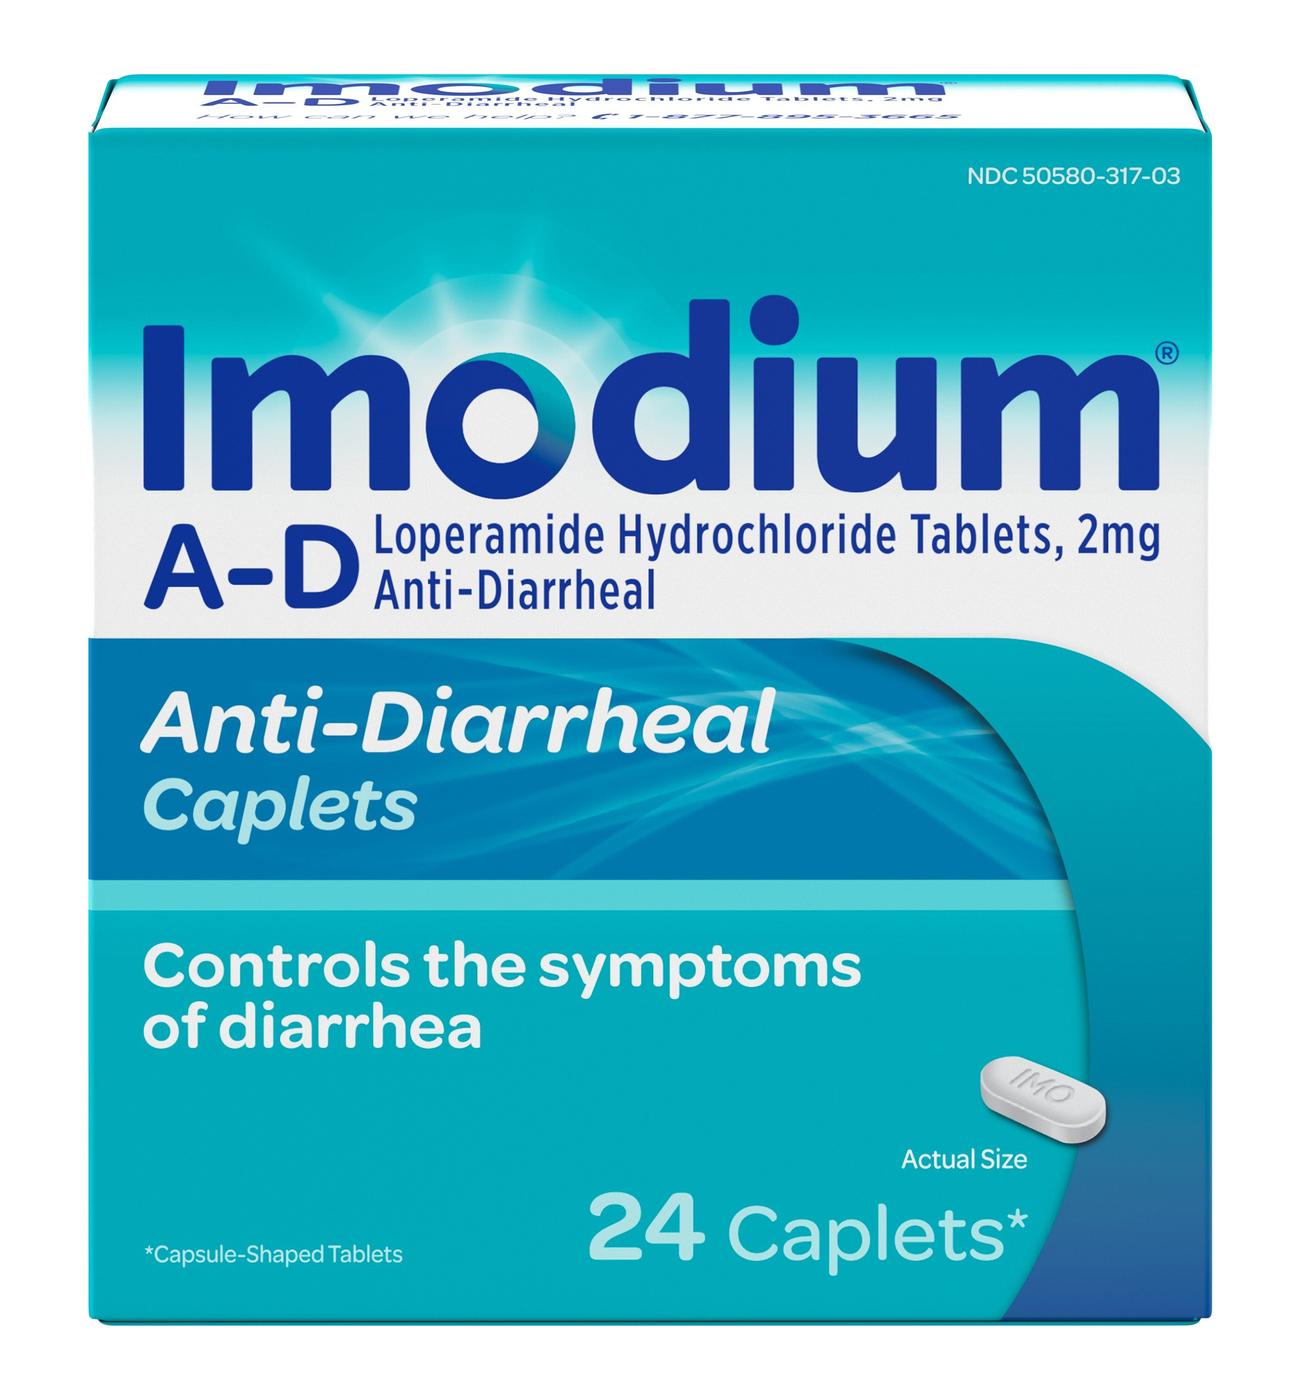 Imodium A-D Anti-Diarrheal Caplets; image 1 of 5